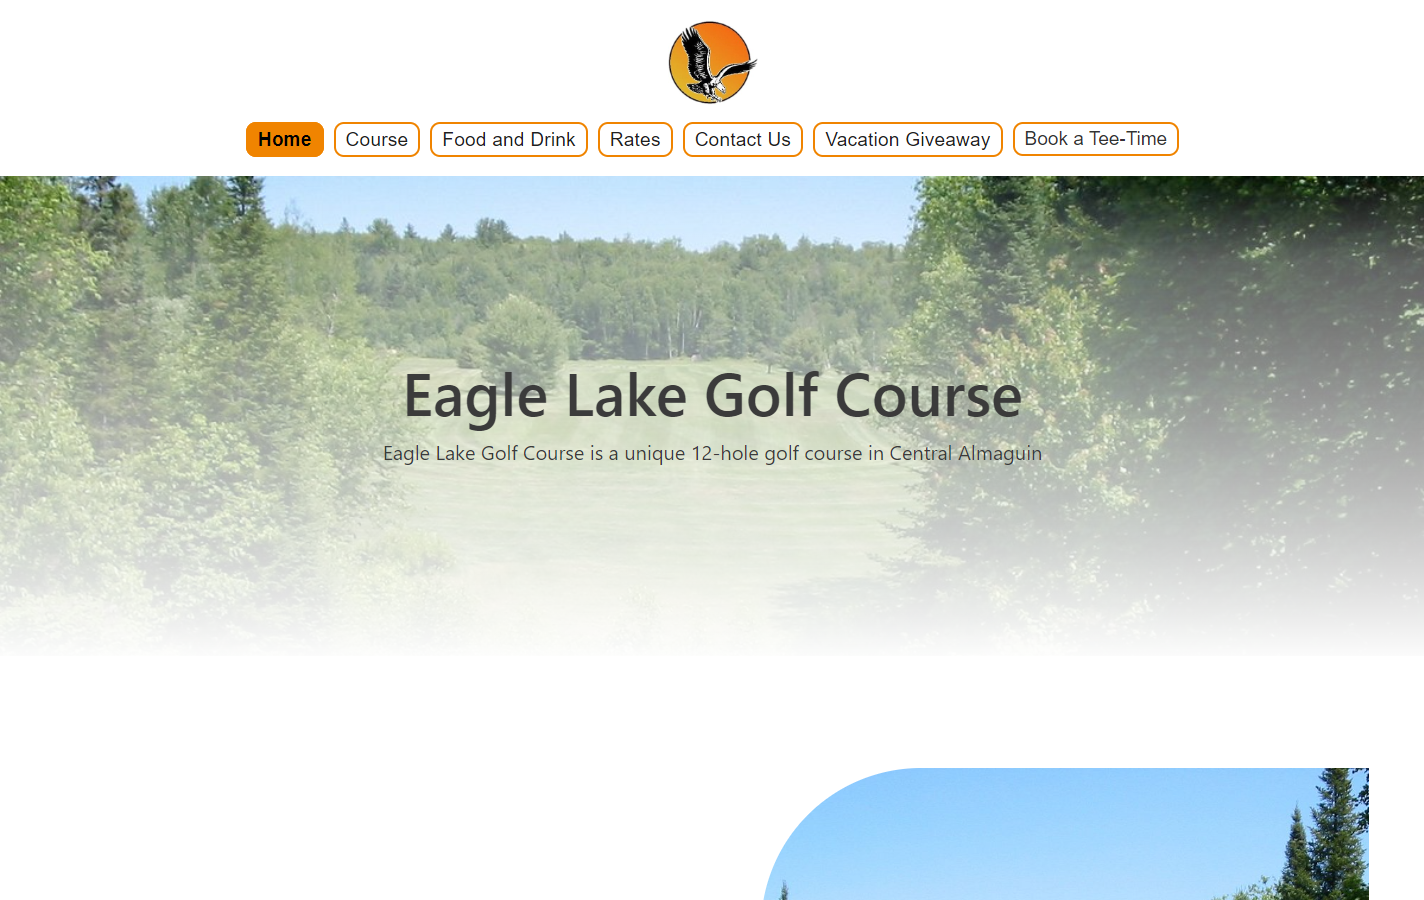 Eagle Lake Golf Course website screenshot